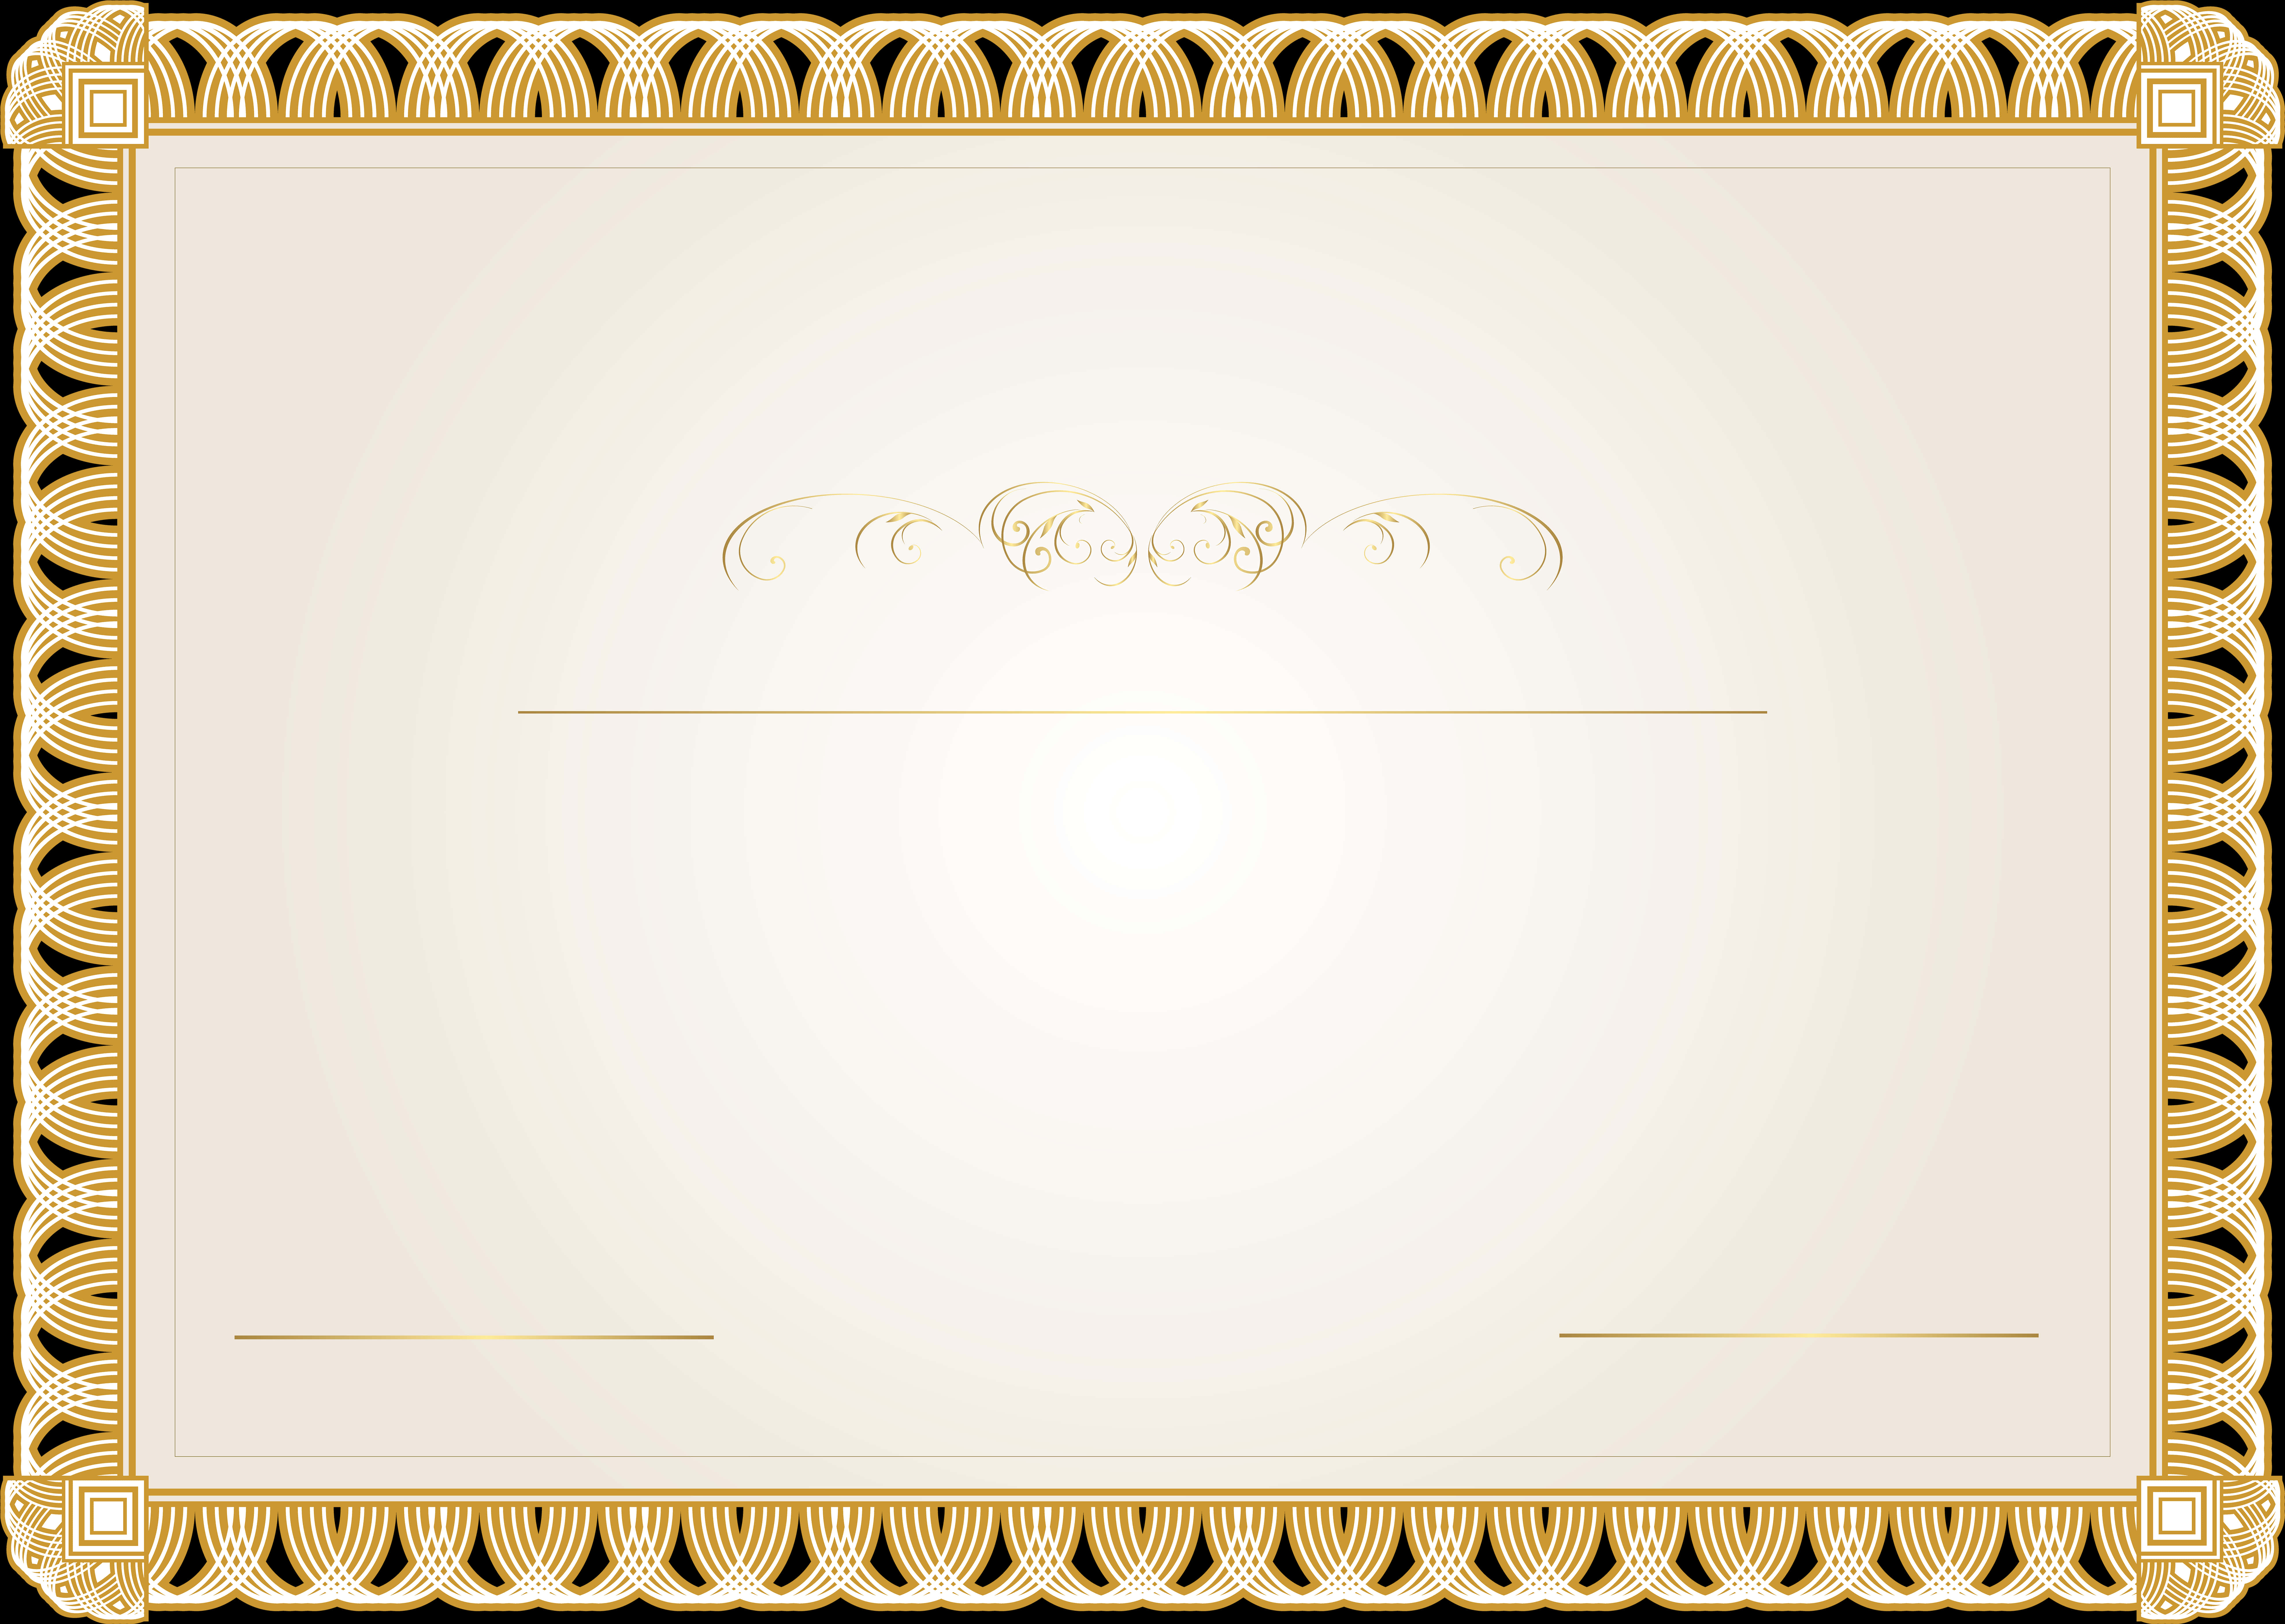 A White Rectangular Frame With Gold Border